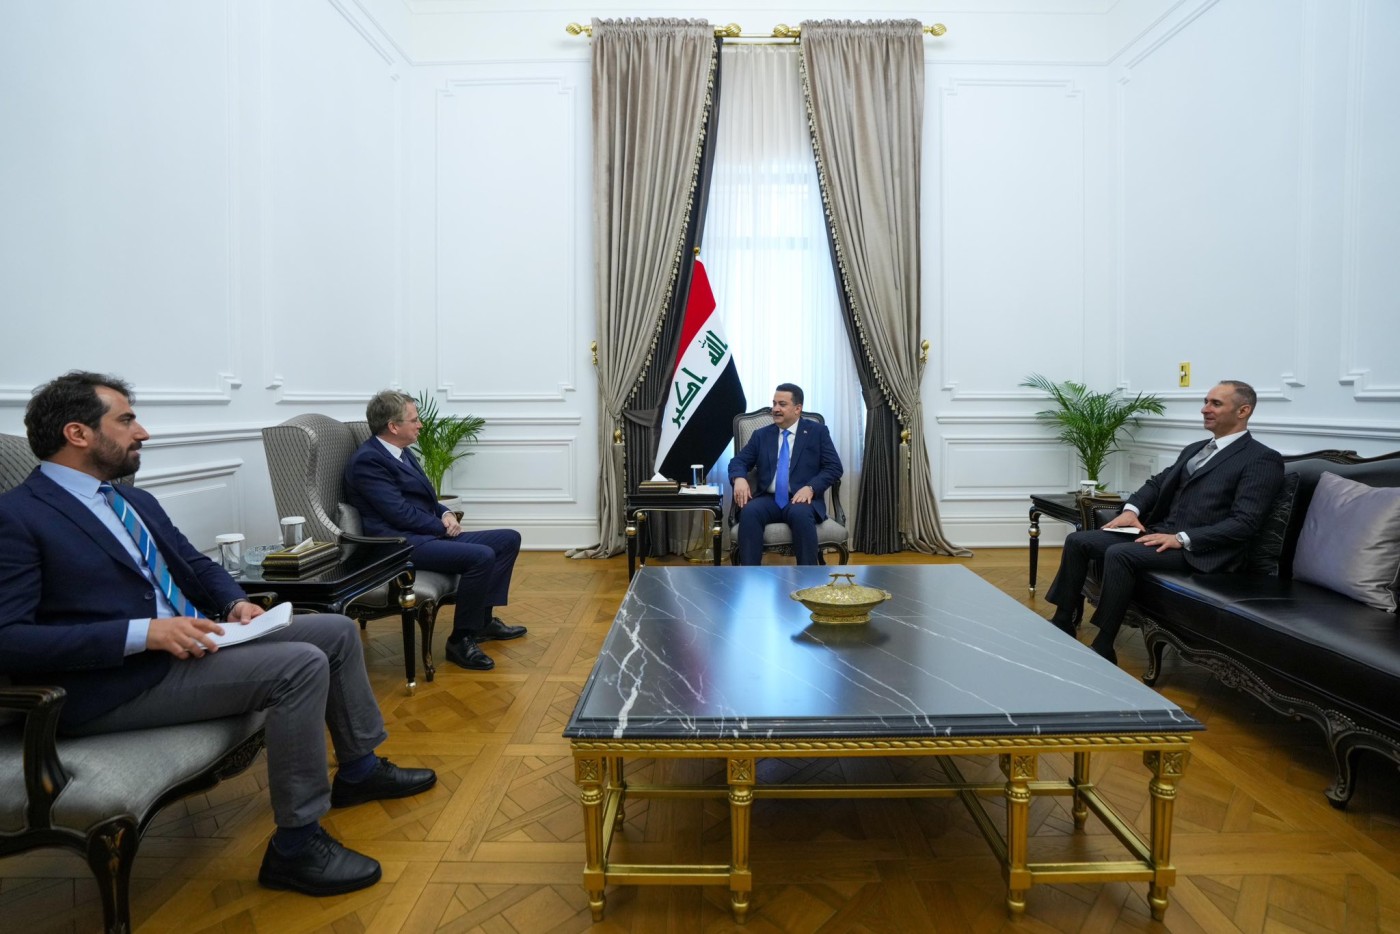 Iraq open to partner with French companies, develop defense capabilities: PM Sudani